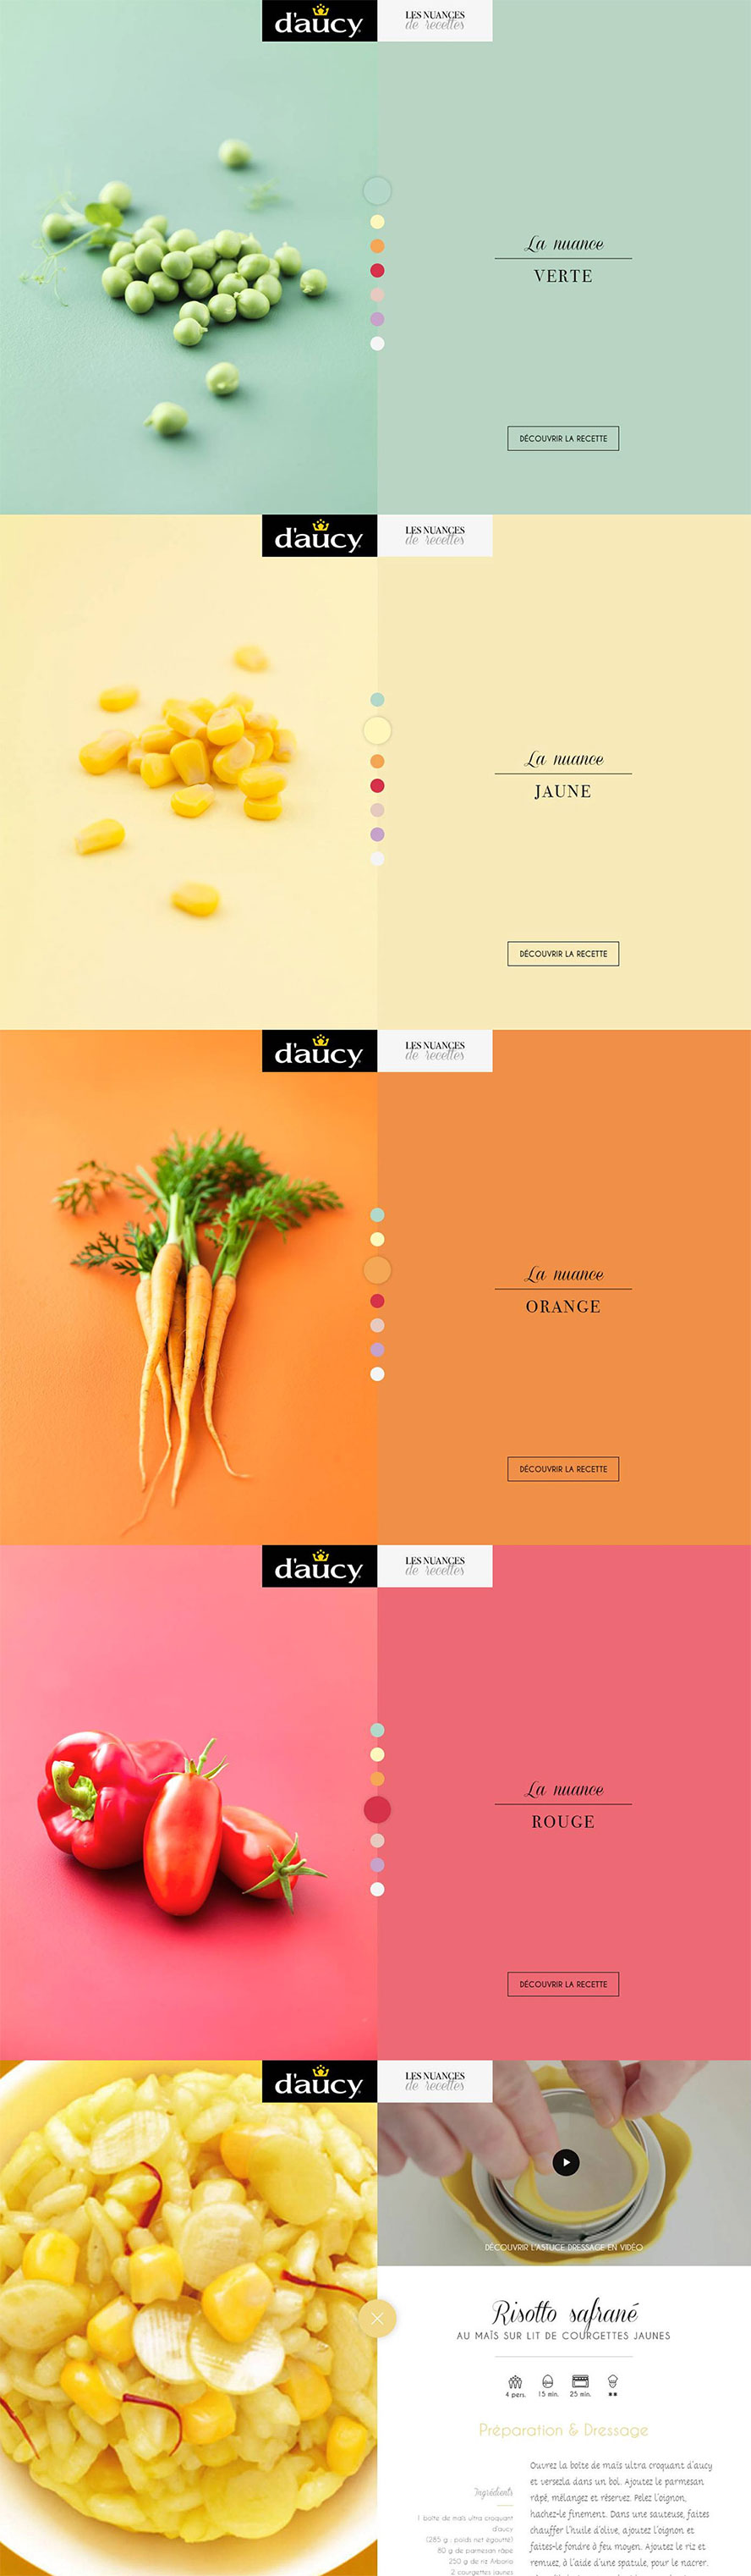 D''aucy食品配色网站欣赏